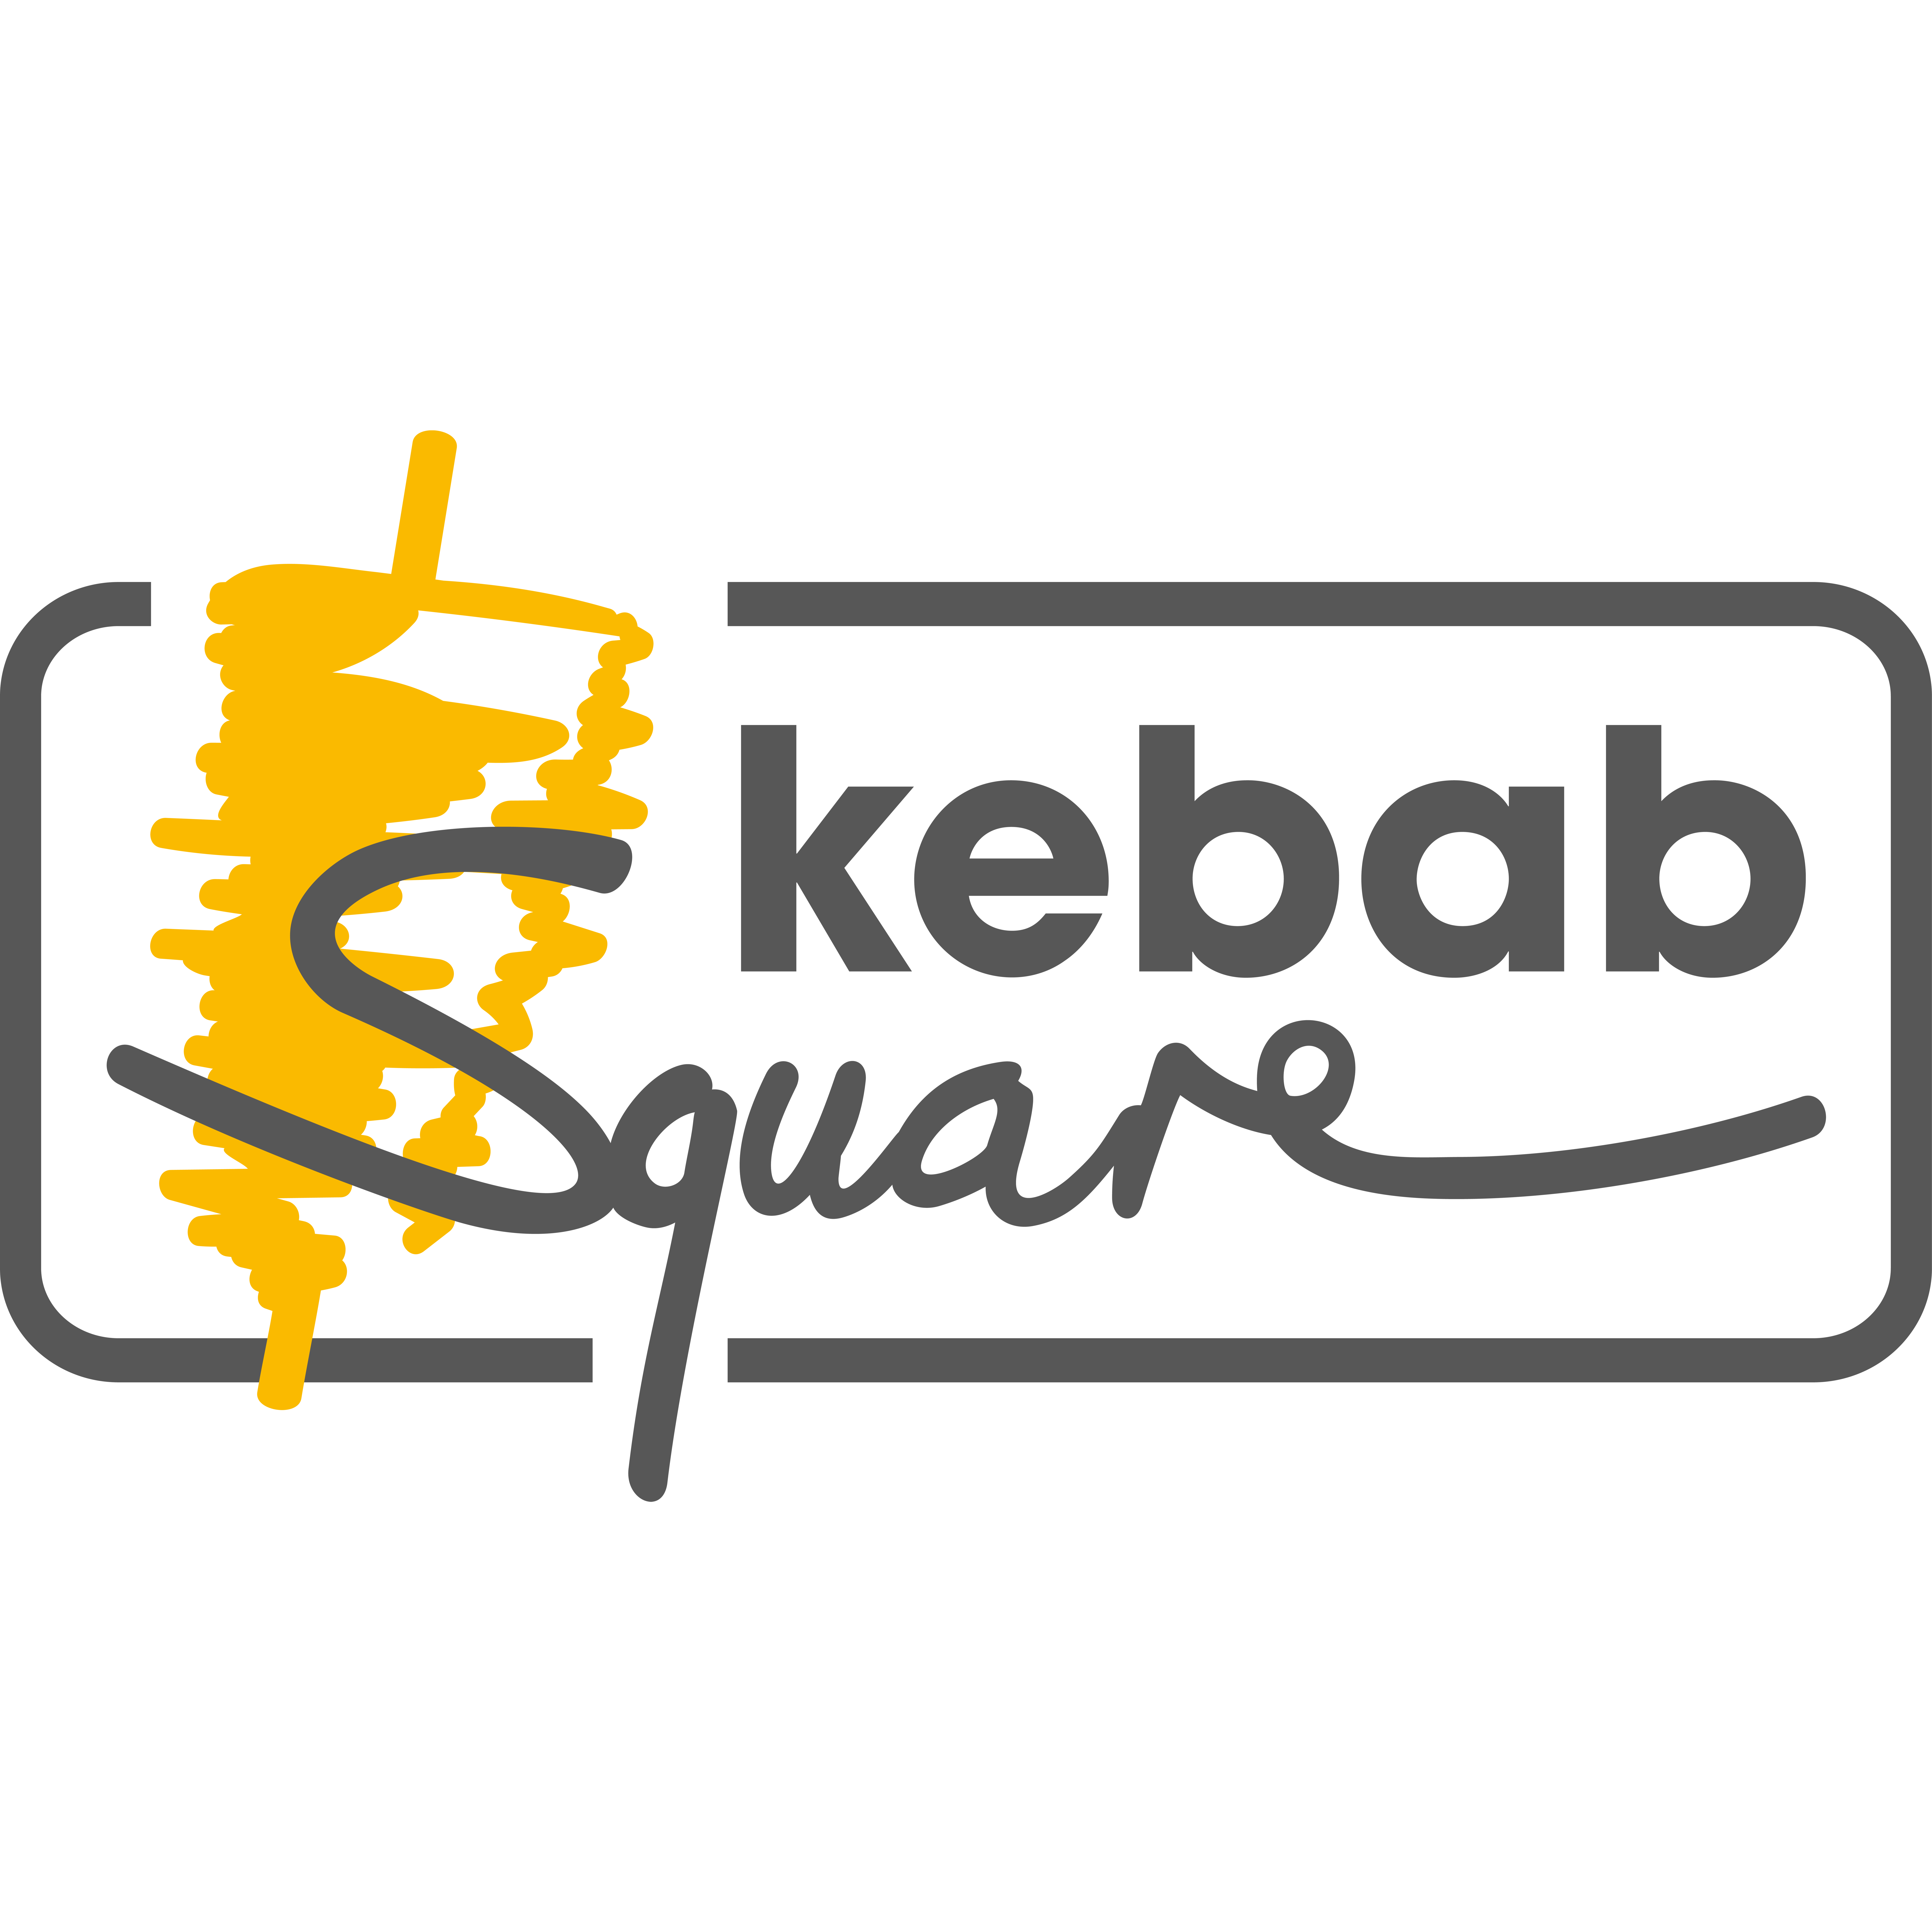 Kebab Square Logo